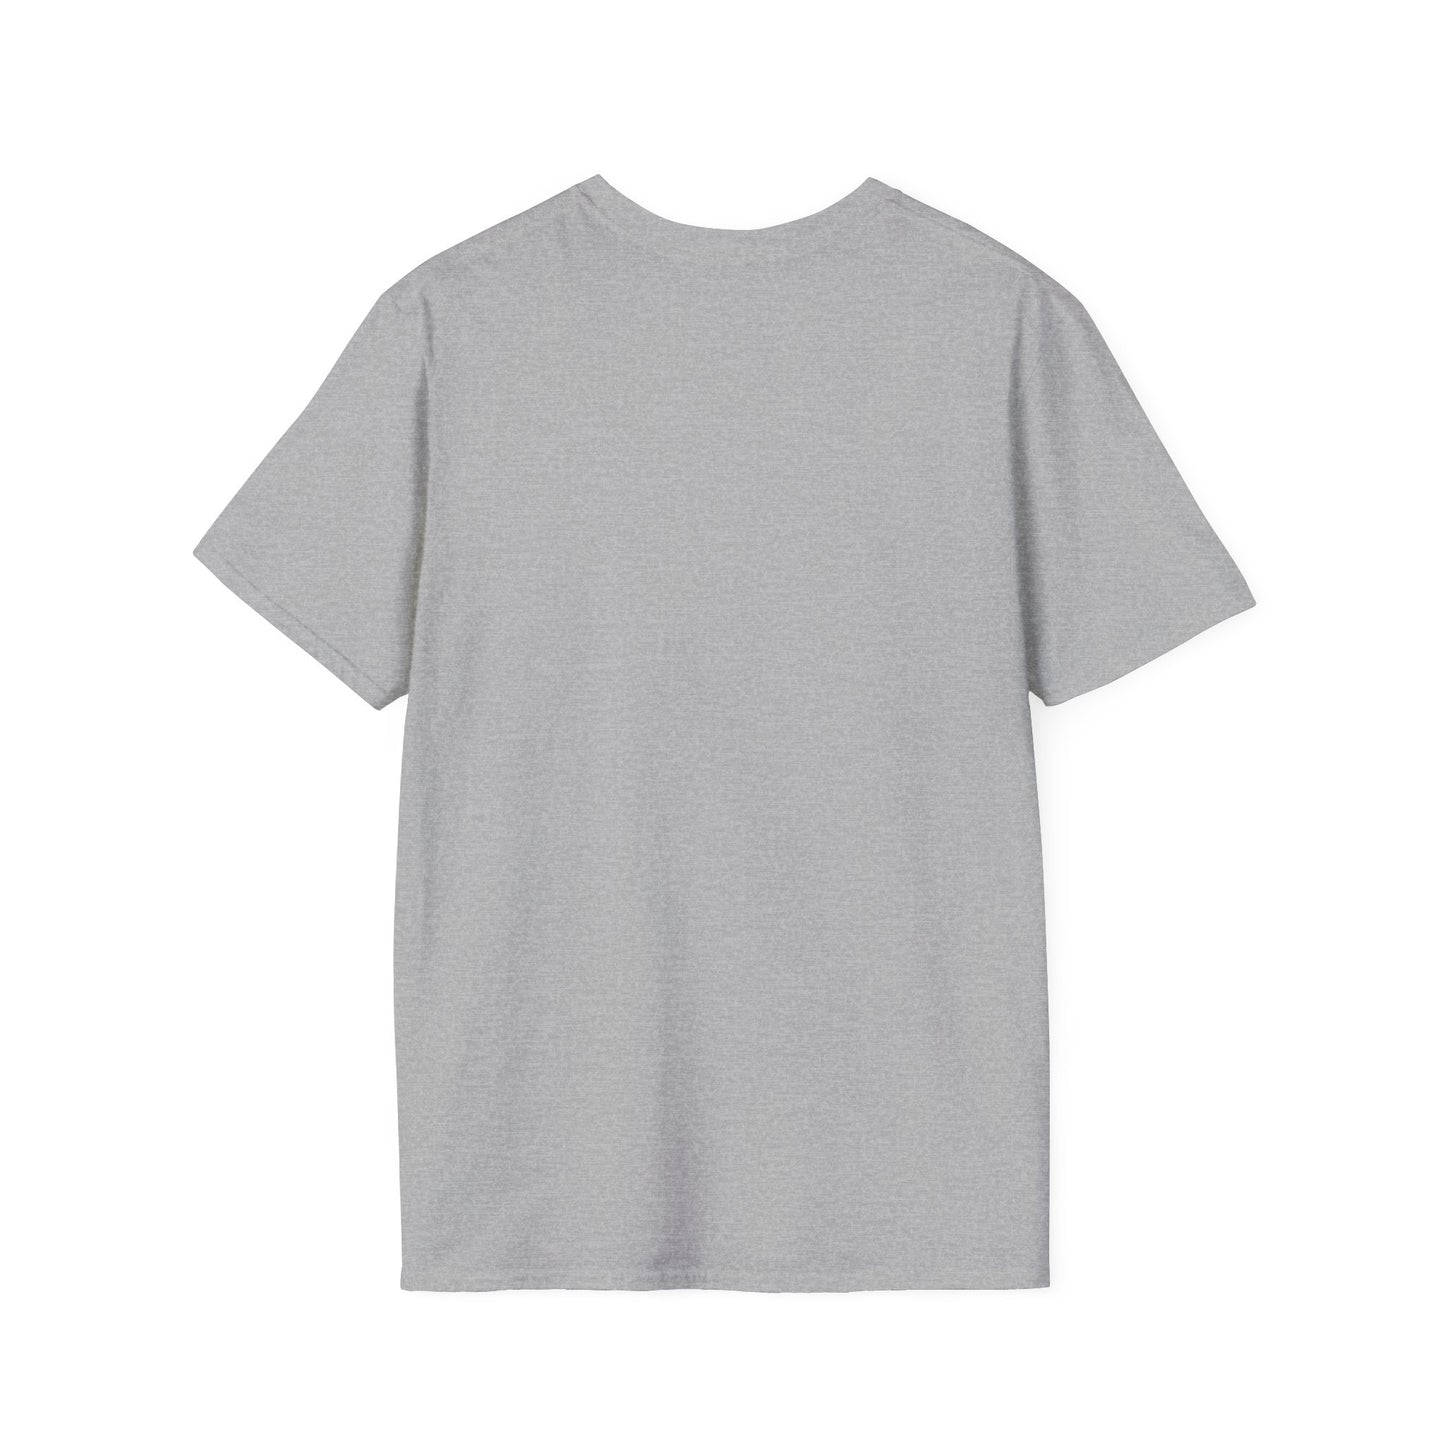 Rock Paper Scissors - Unisex Softstyle T-Shirt